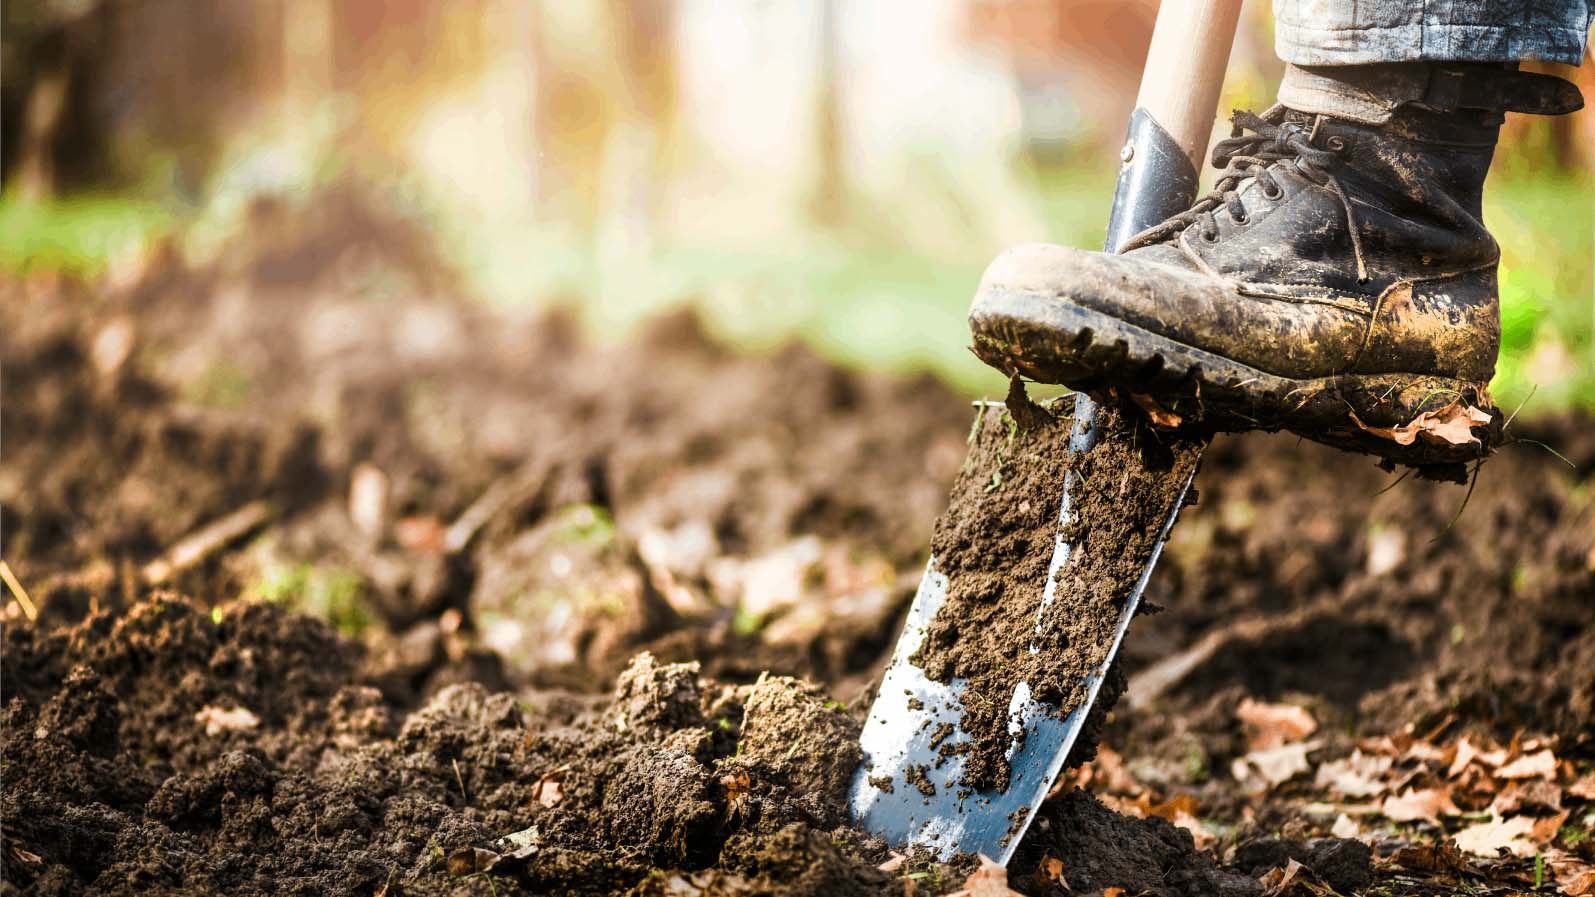 A close up of a spade digging in soil